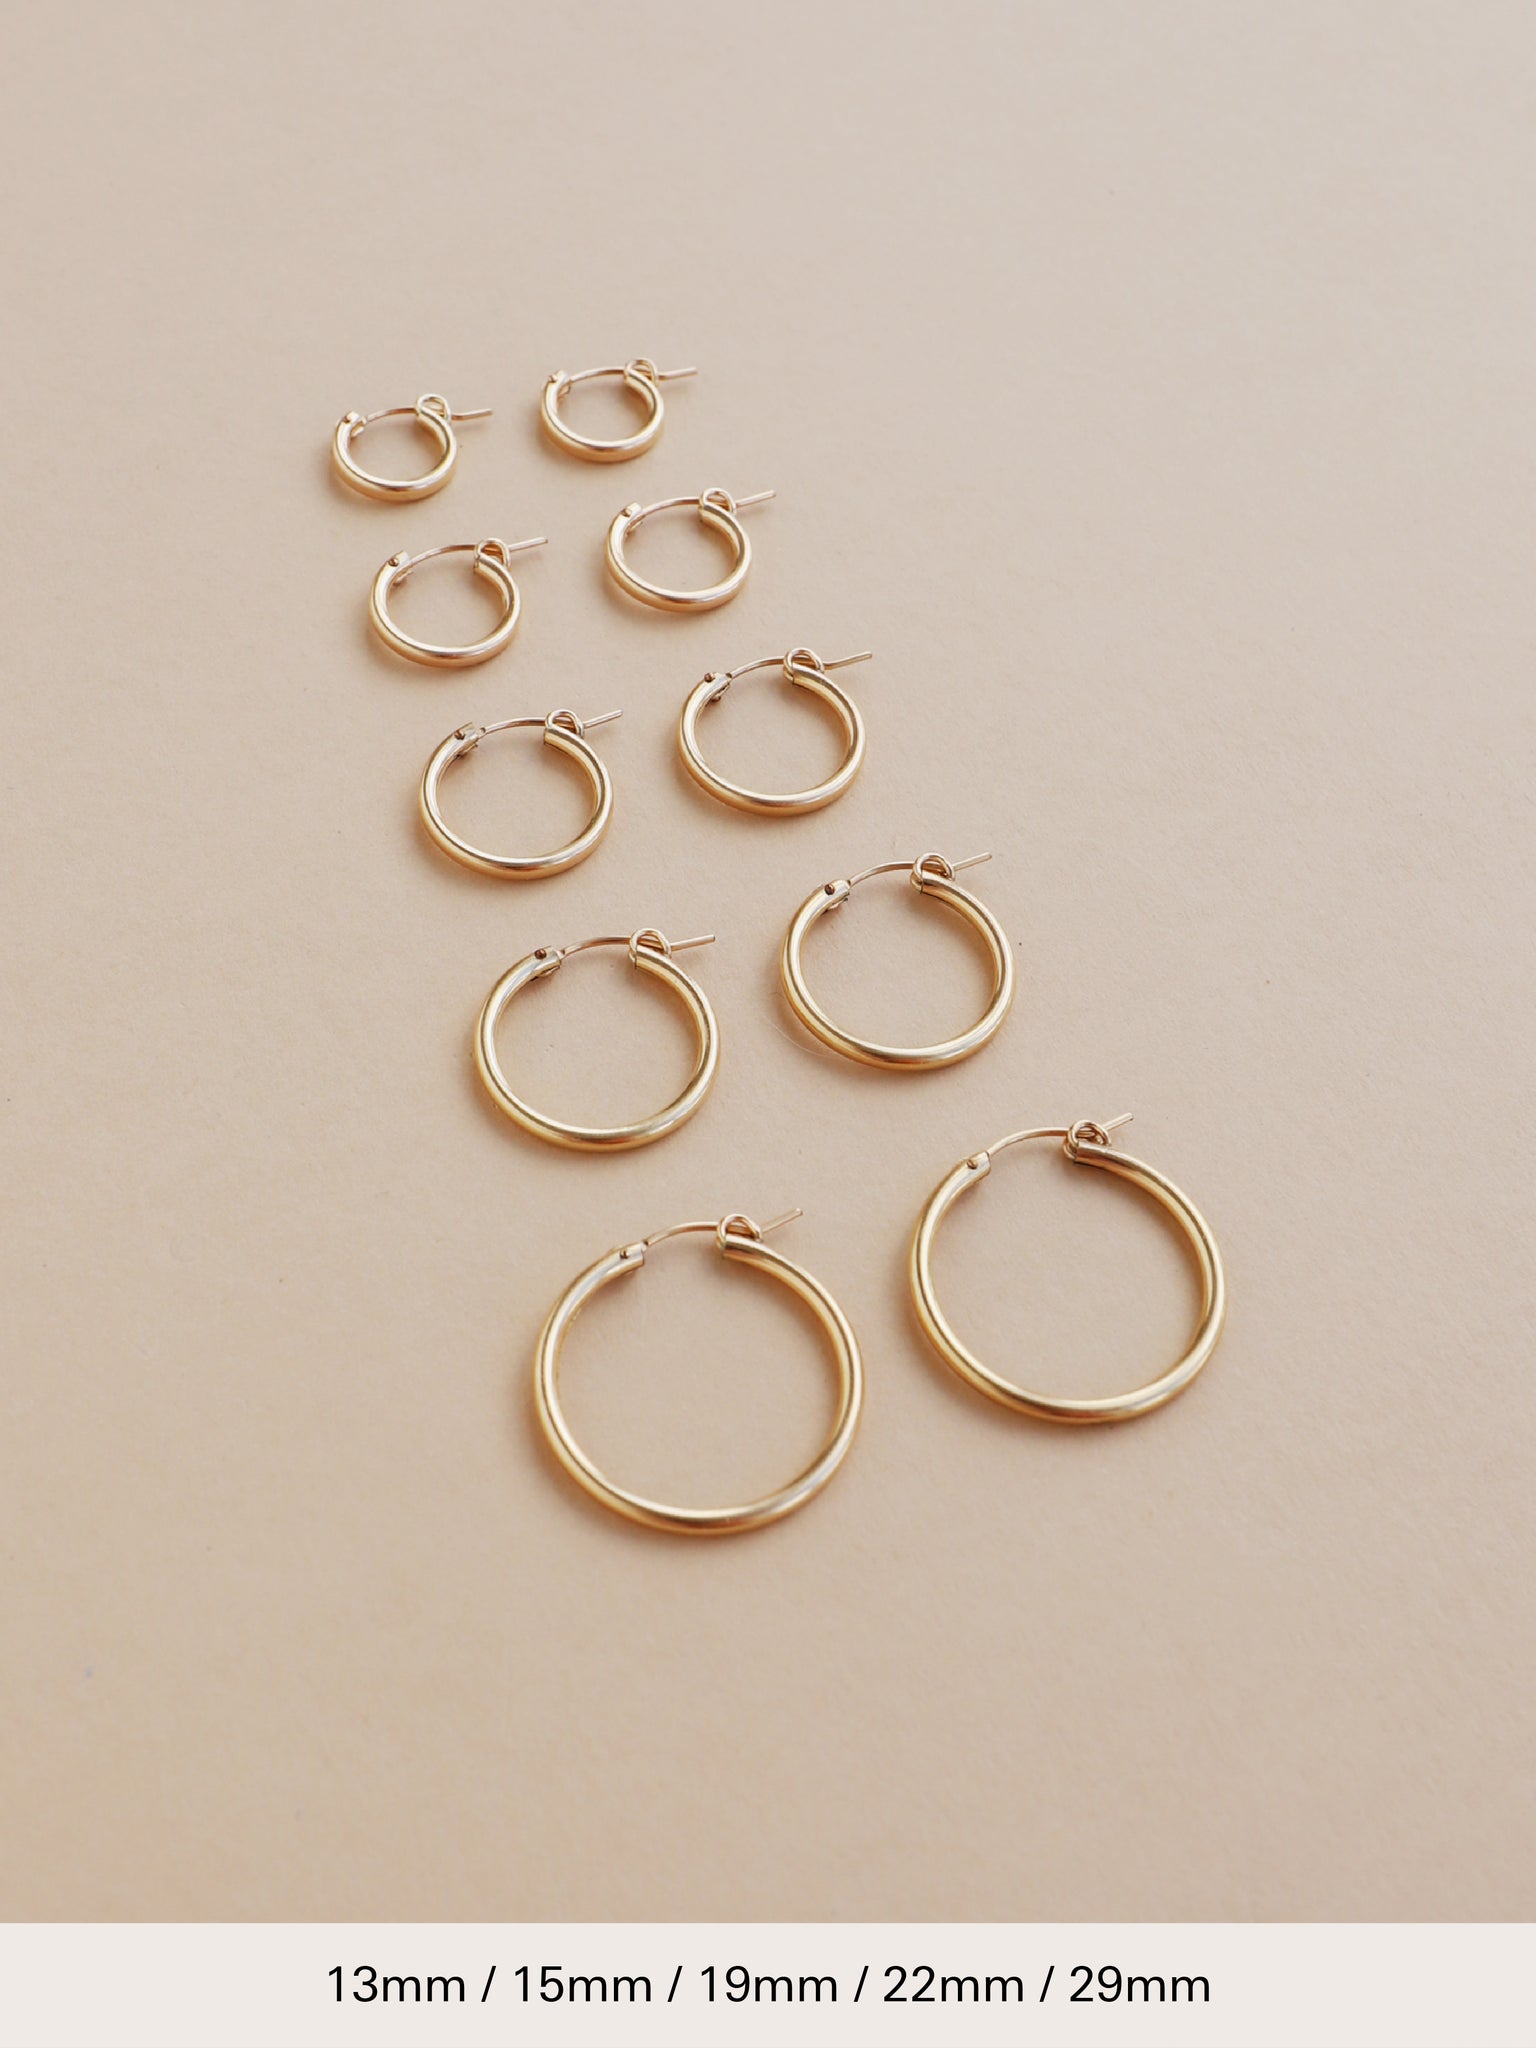 Buy 925 Sterling Silver Oxidized Bali Hoop Earrings for Women, Kids and  Girls (HOOP 3, 12mm) at Amazon.in